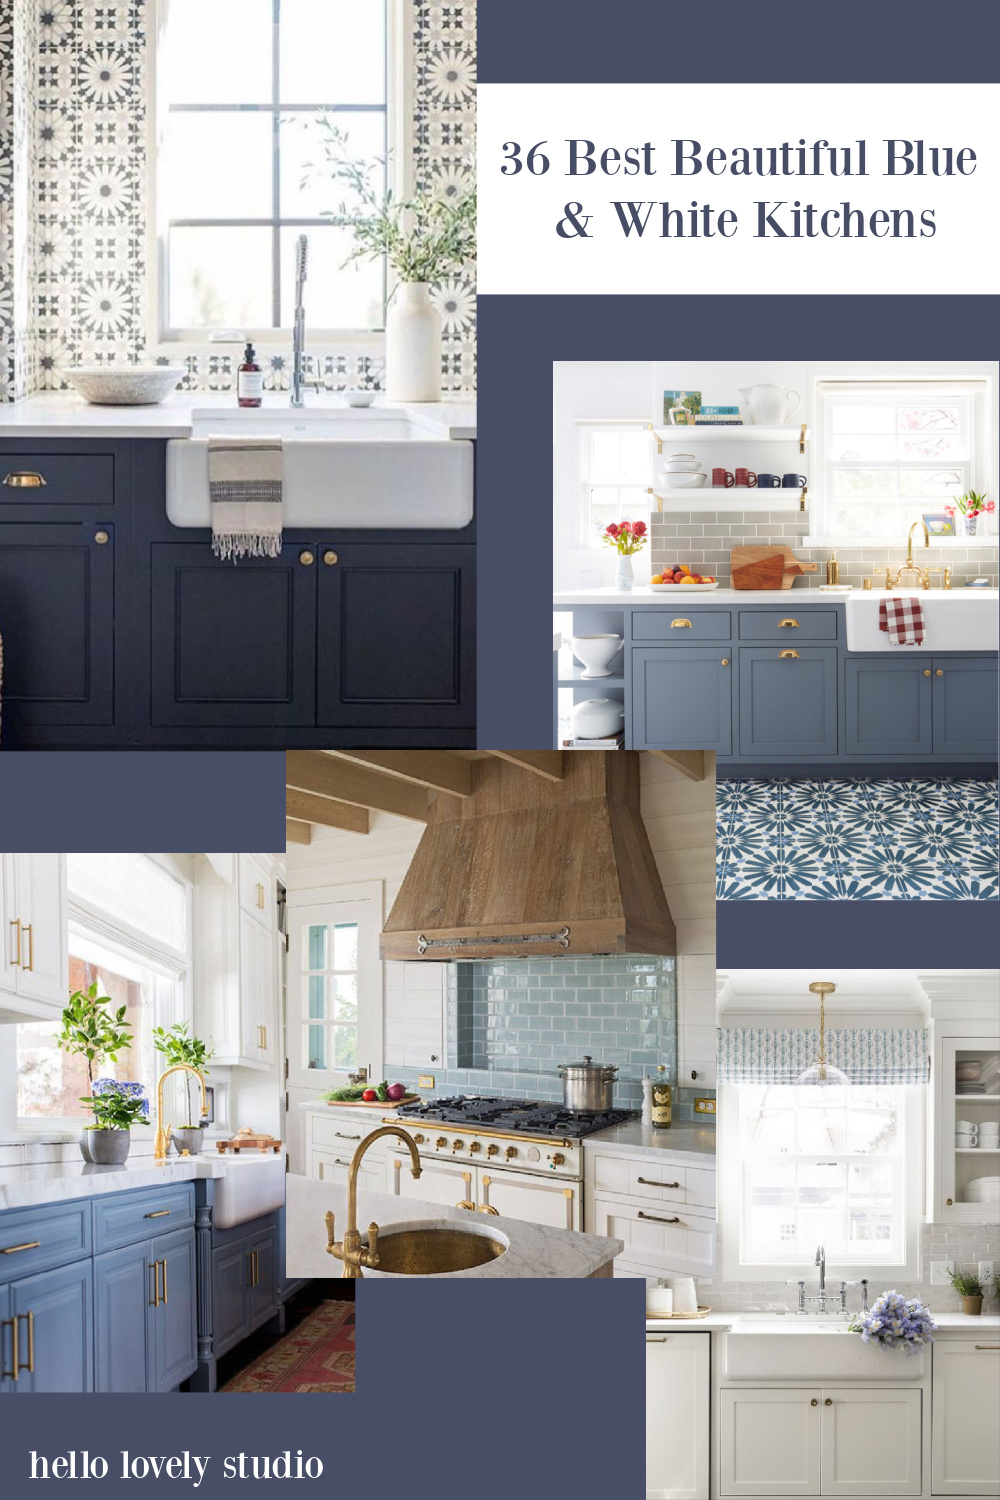 36 Best Beautiful Blue and White Kitchens - Hello Lovely Studio. #bluekitchens #kitchendesign #interiordesign #blueandwhite #kitchendecor